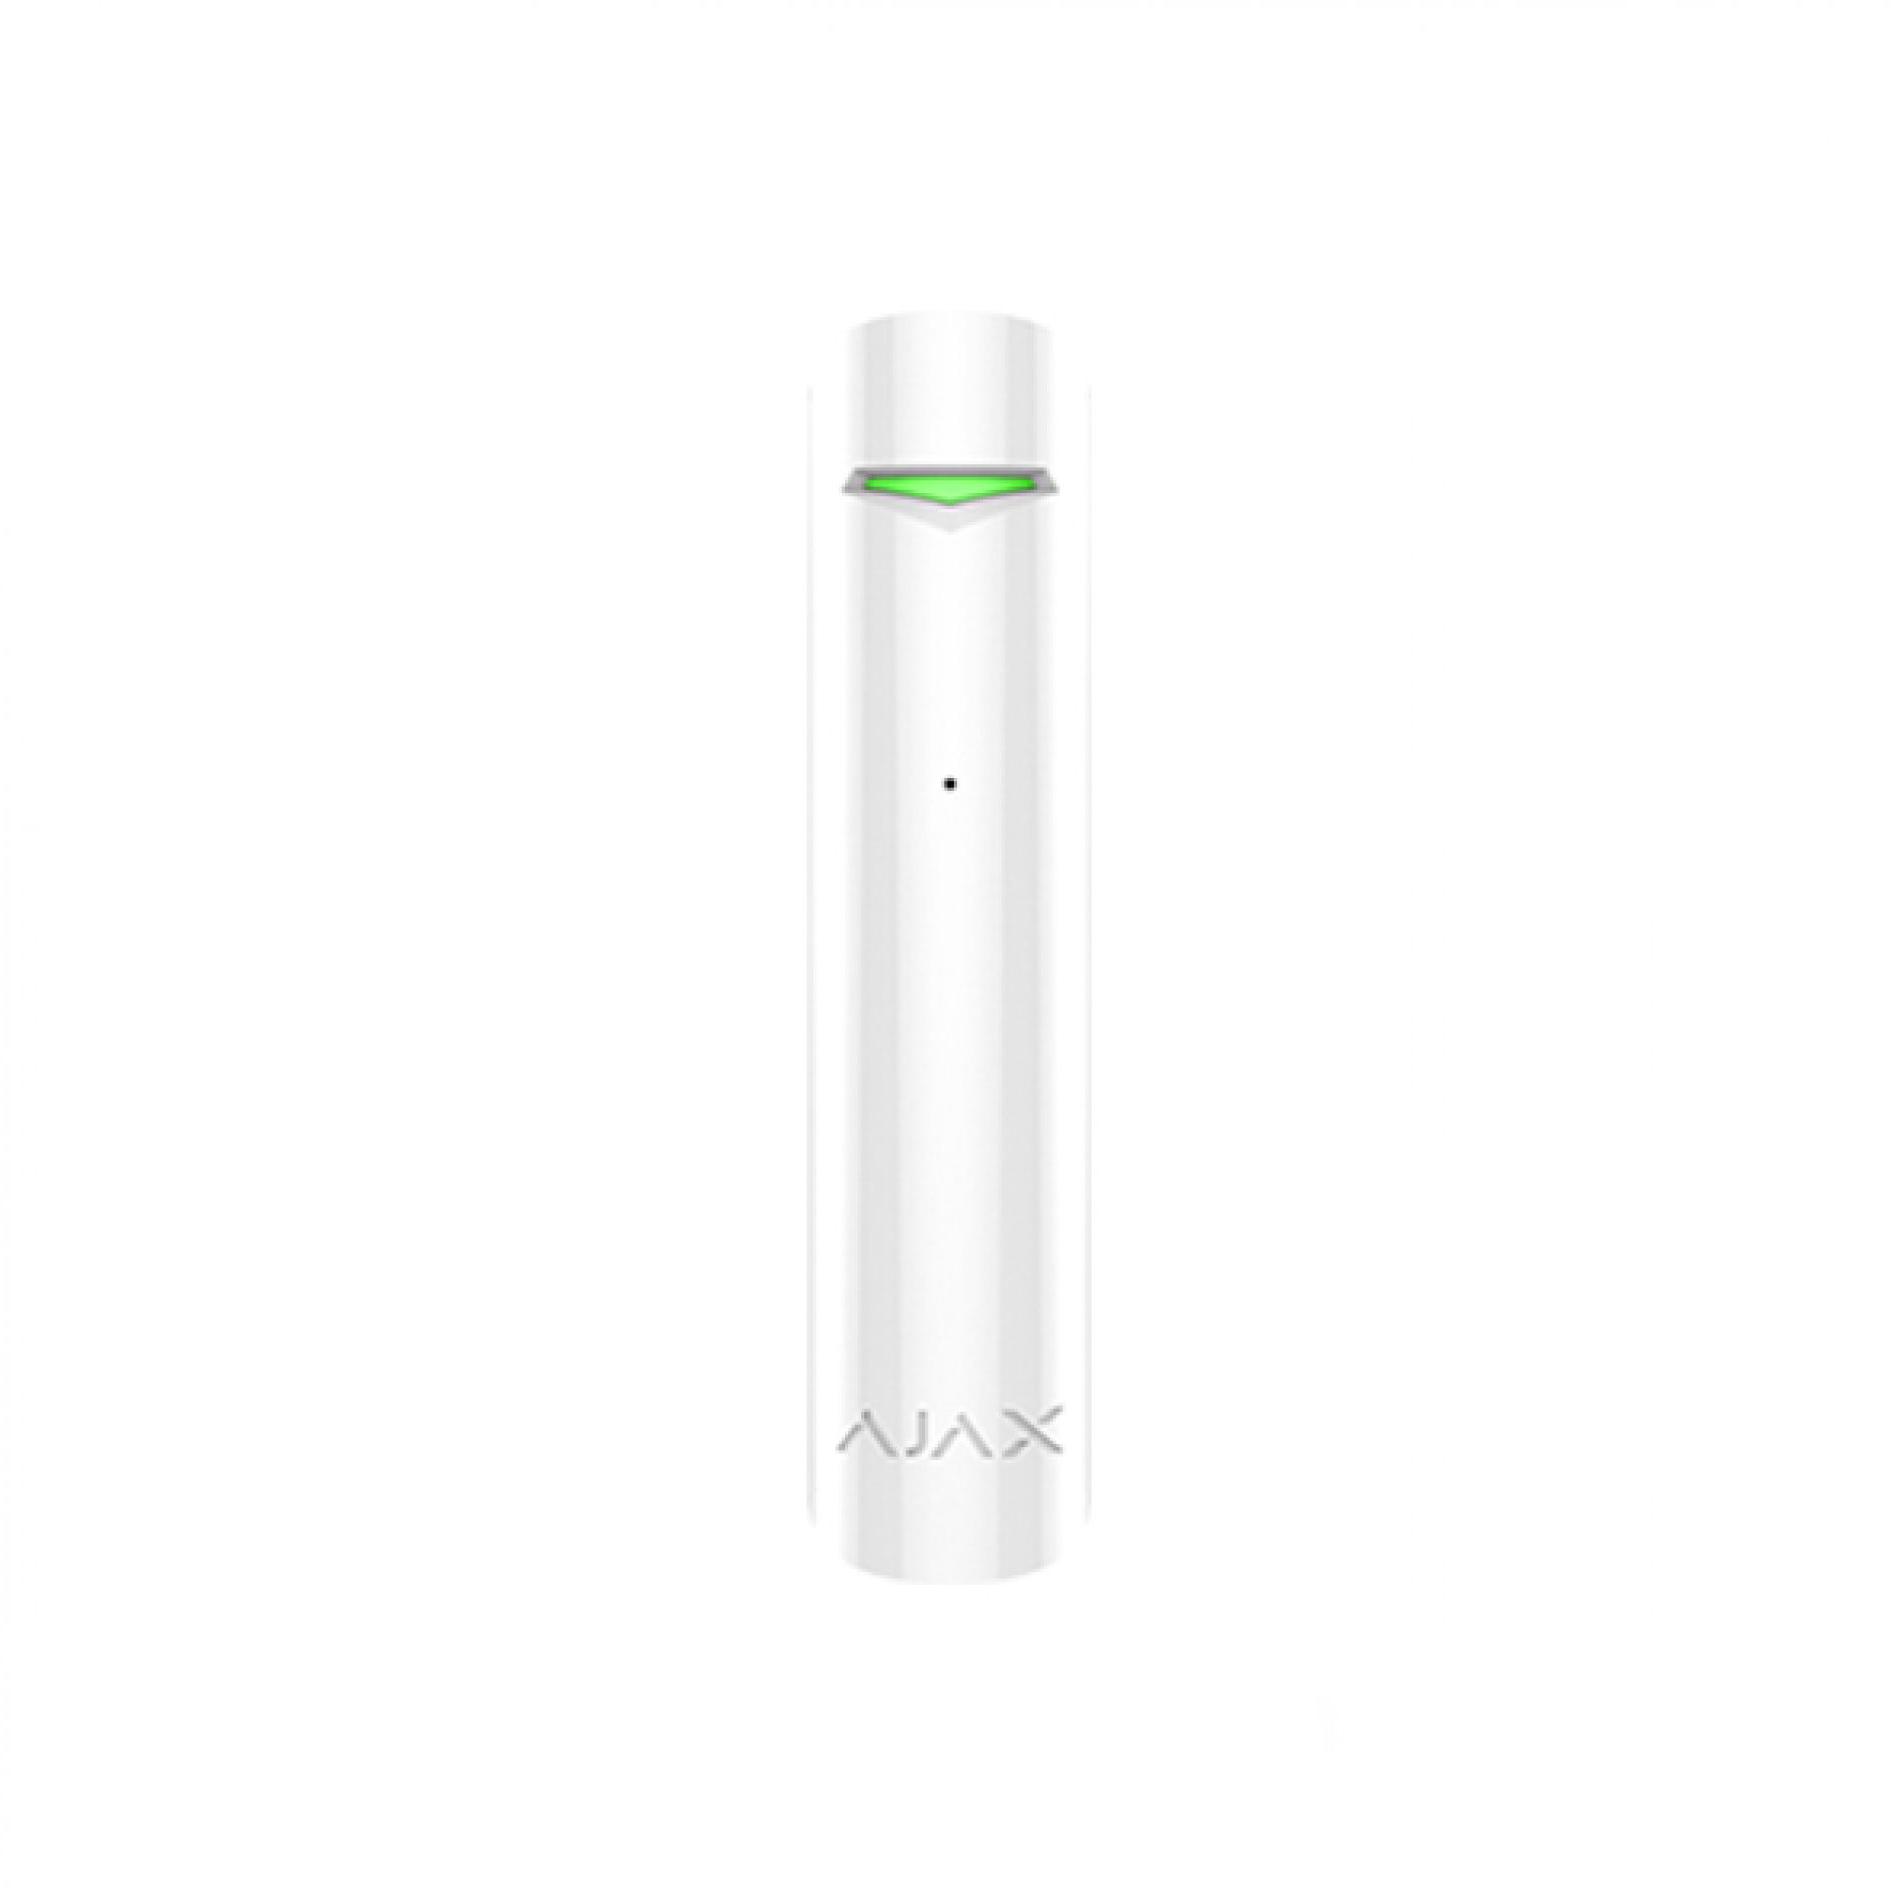 AJAX DoorProtect G3 white - Fibra